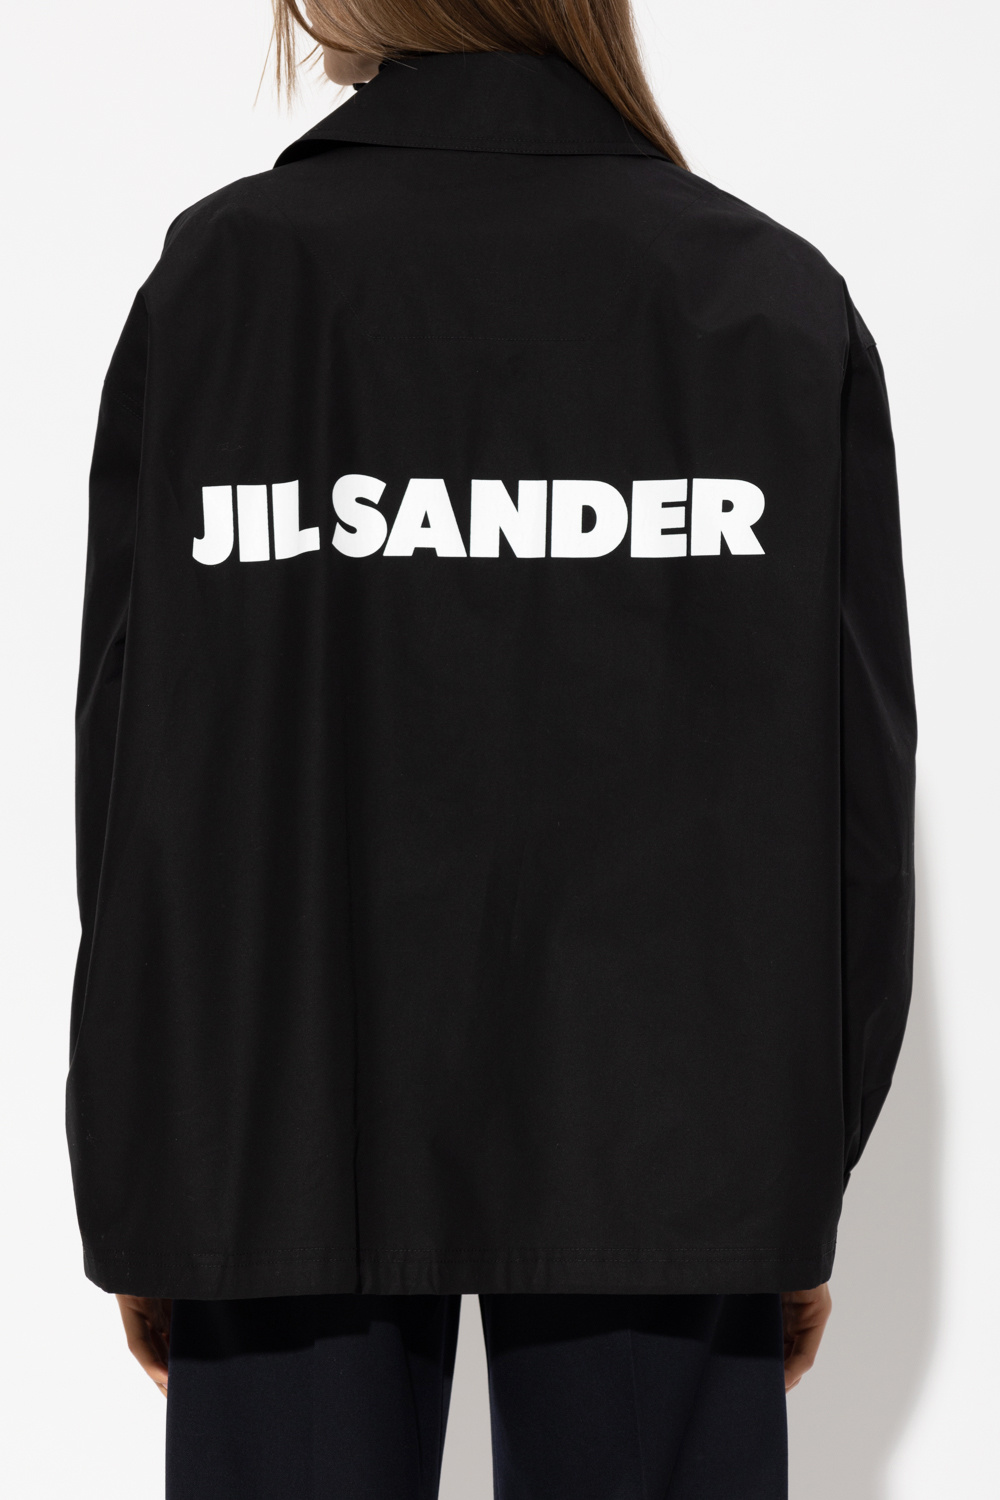 JIL SANDER Cotton jacket